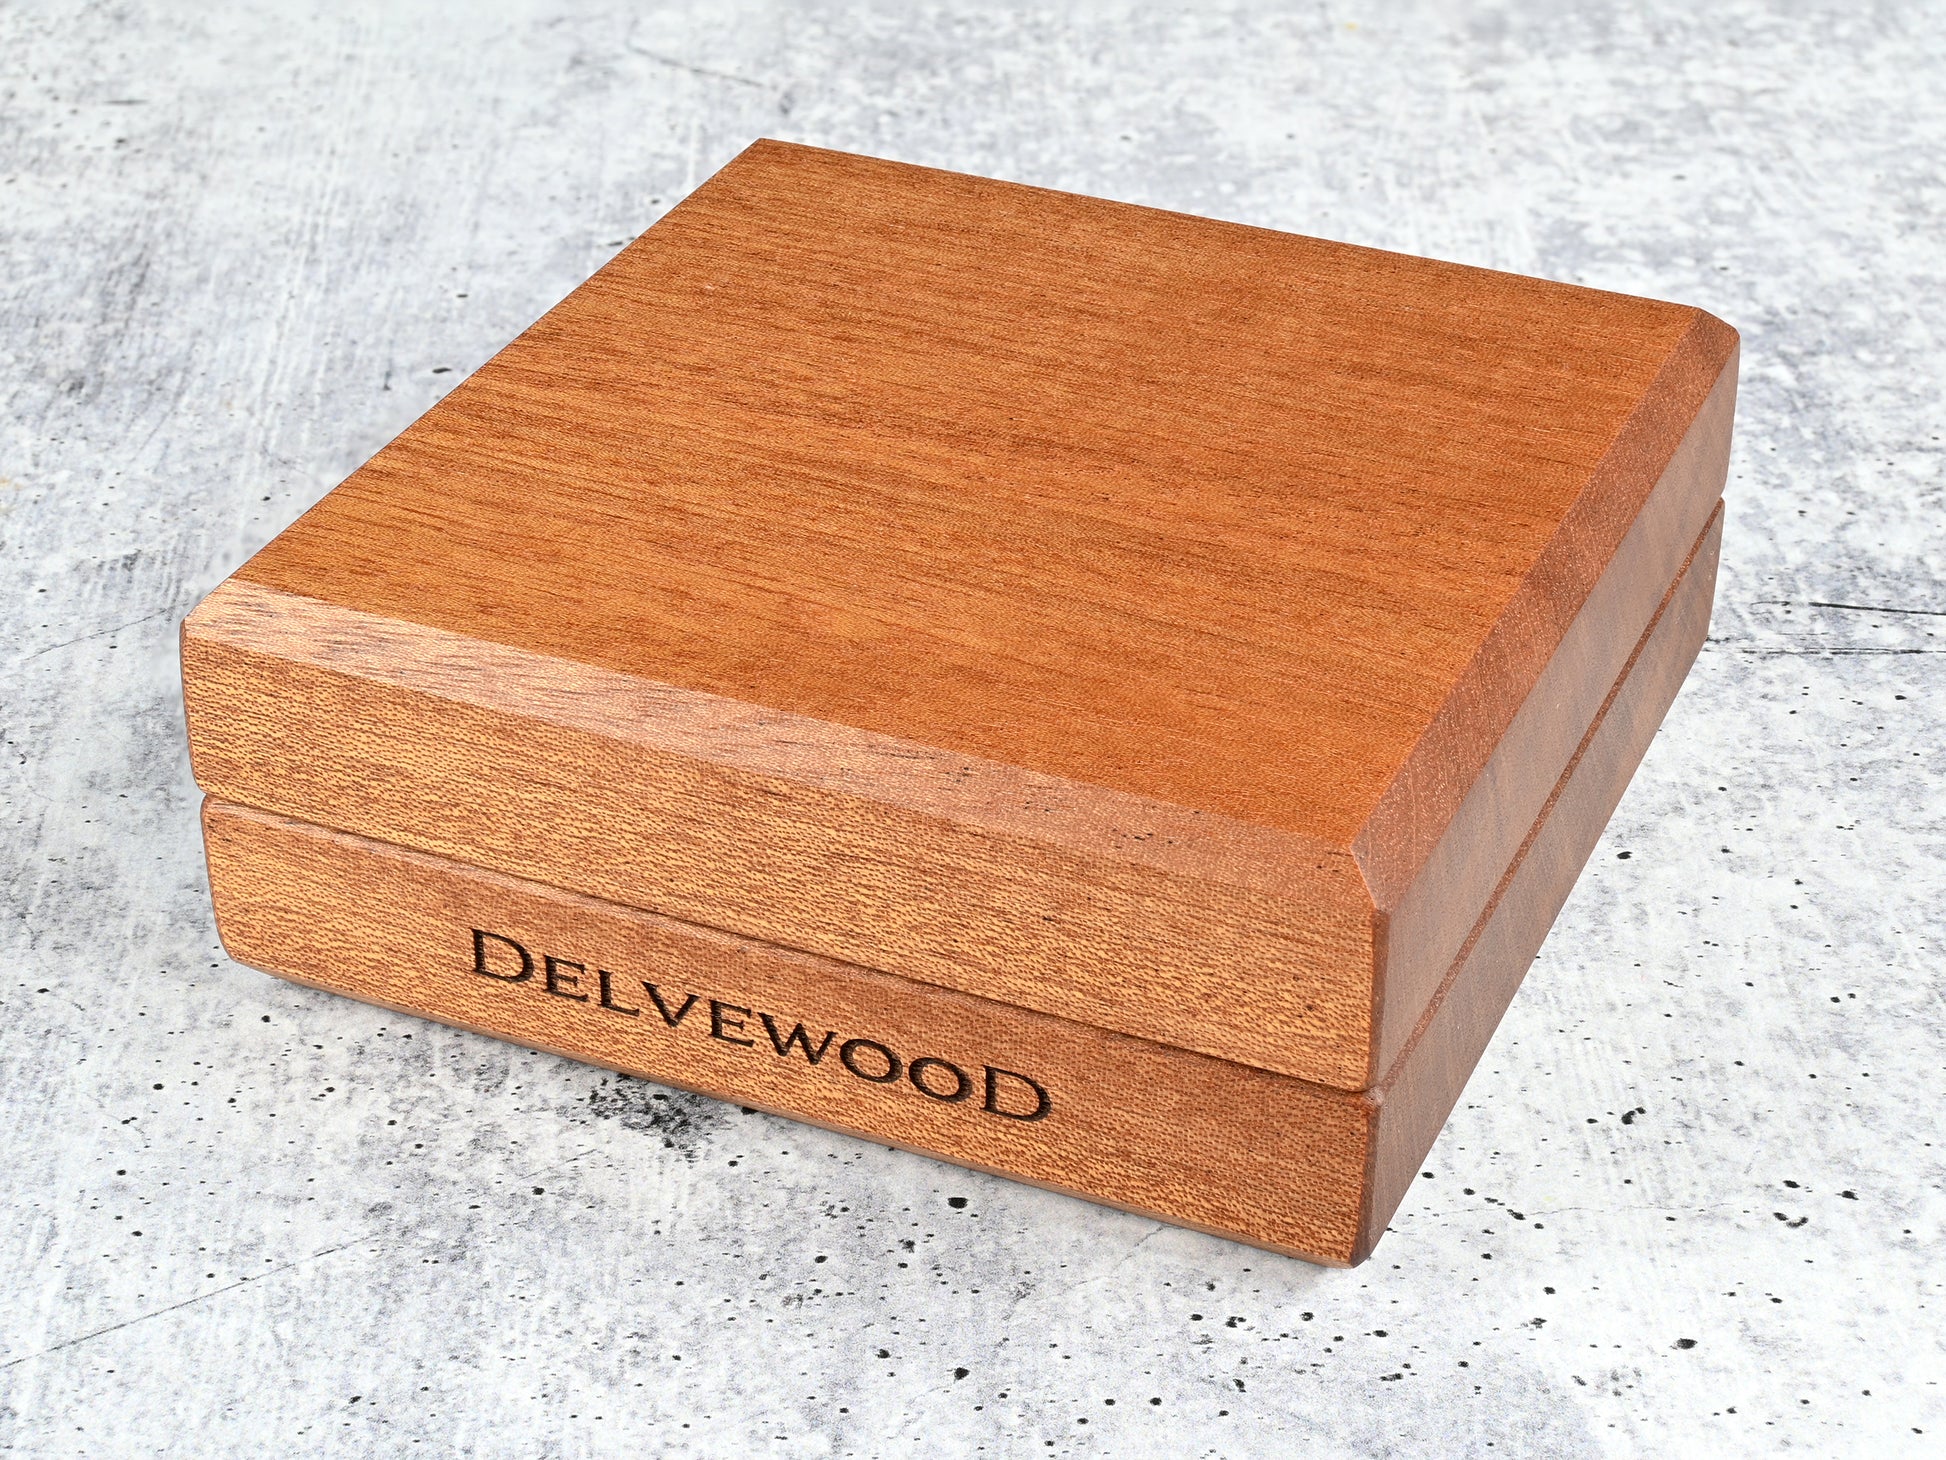 Sapele wood little delver dice box for dnd ttrpg